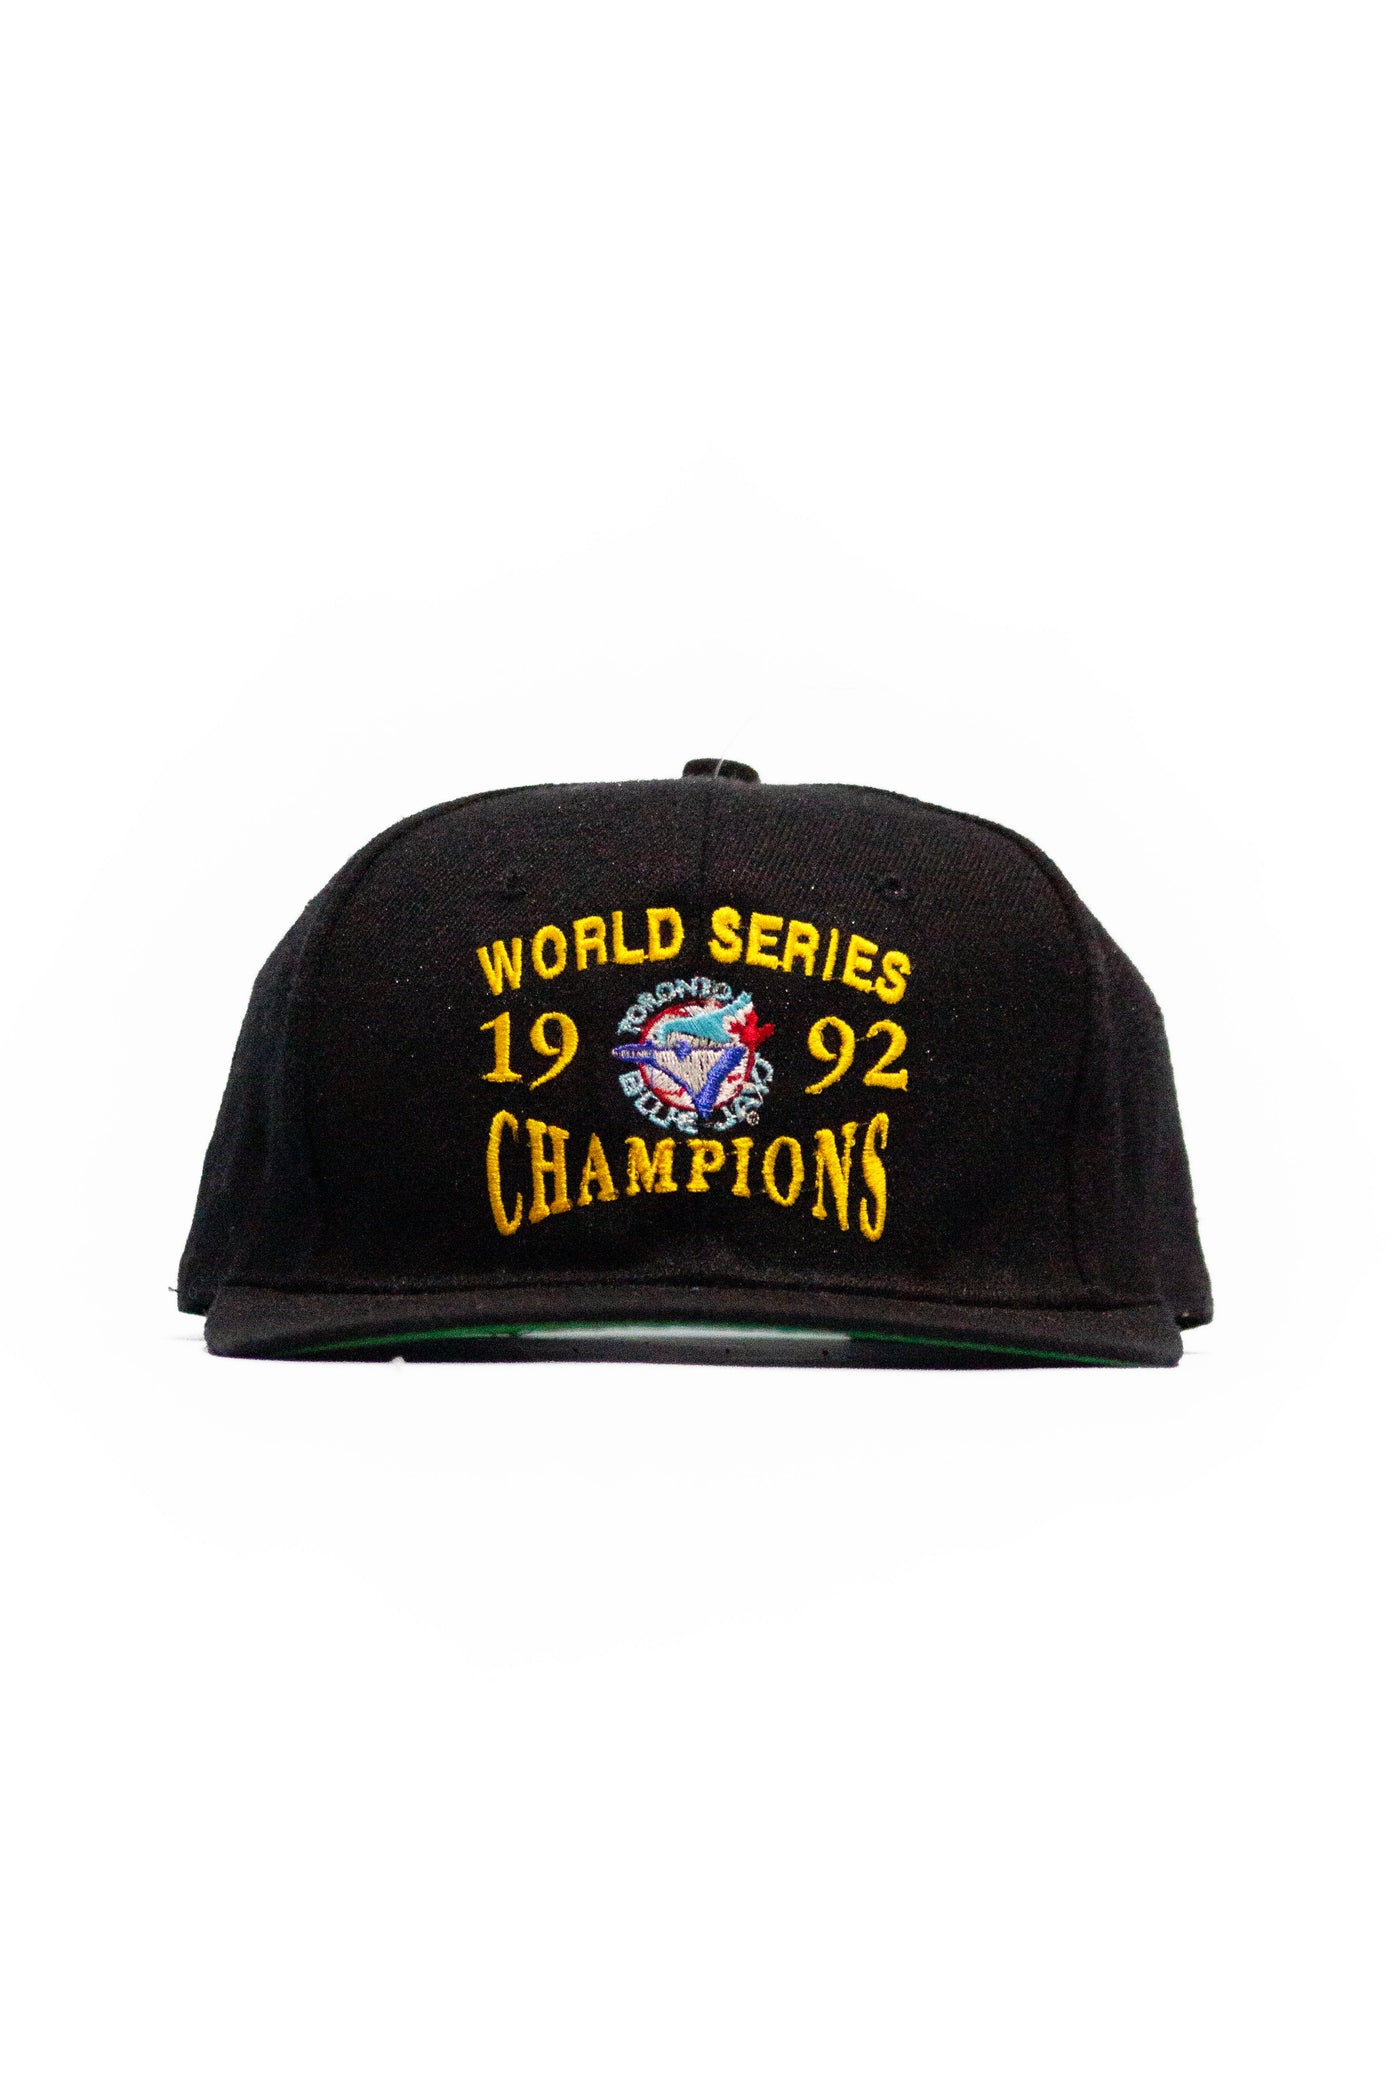 Vintage 1992 World Series Champions Snapback